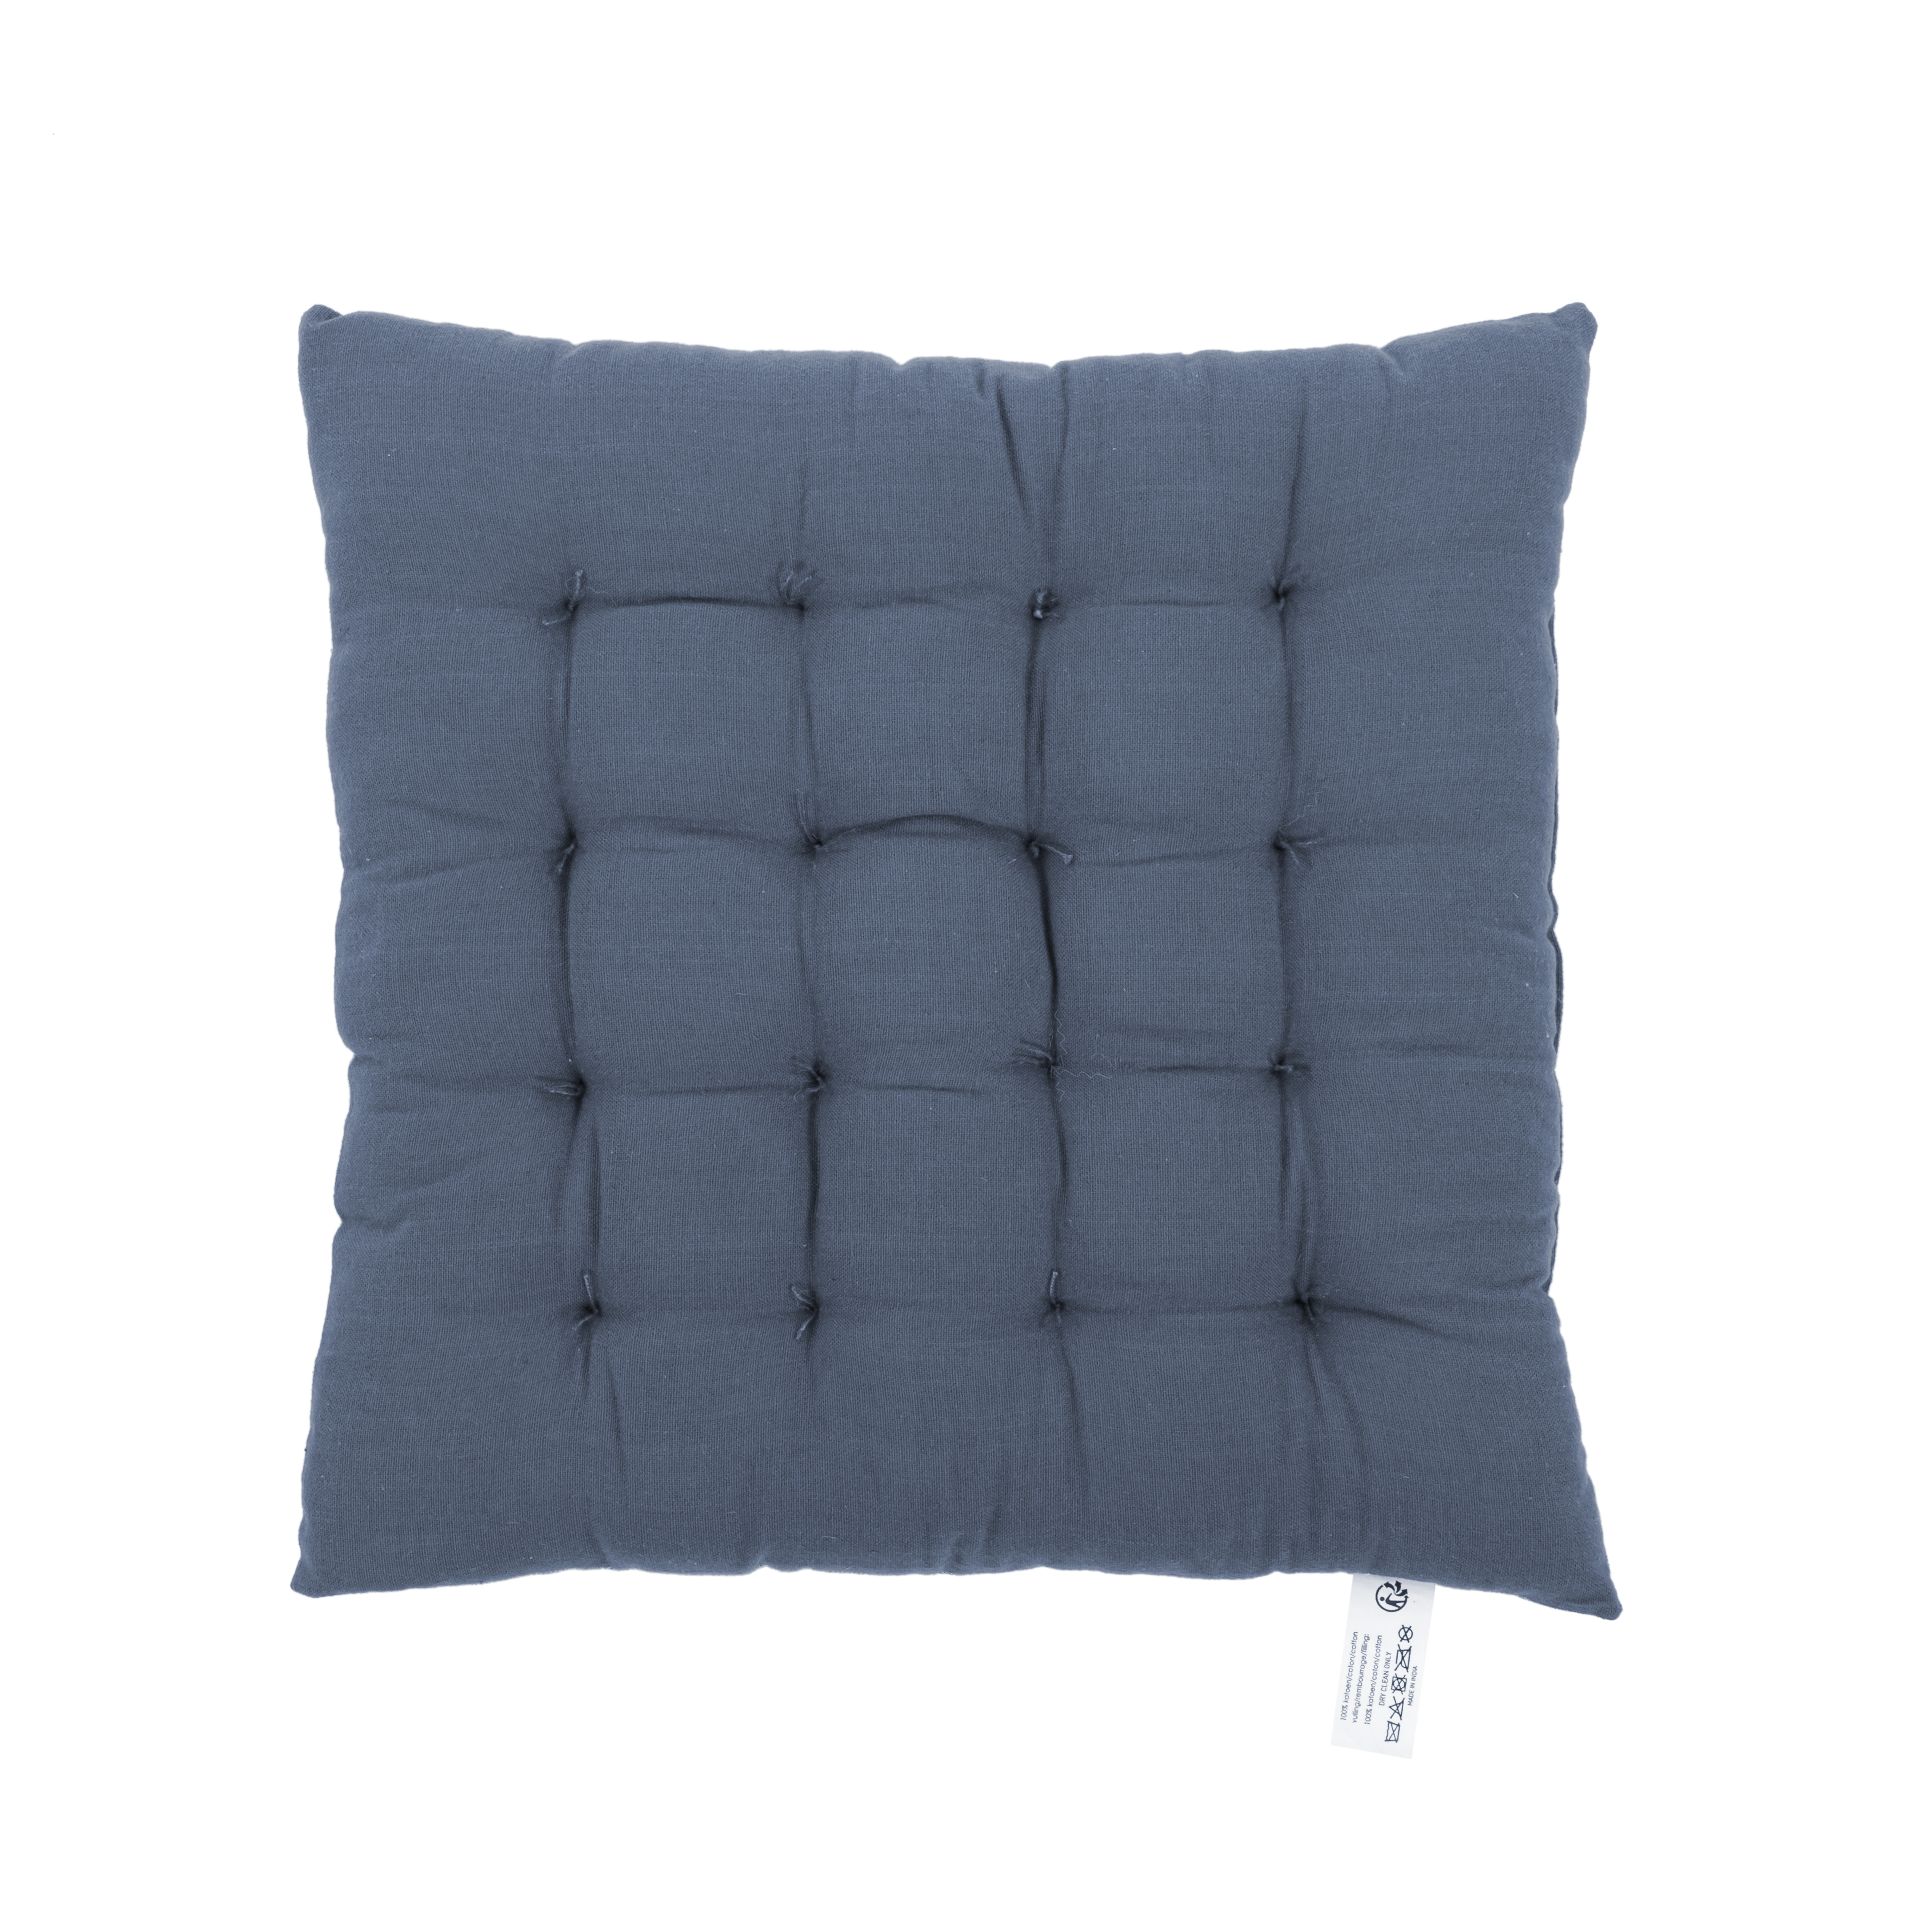 Galette de chaise CHAMBRAY 40x40cm -16 thuck, bleu